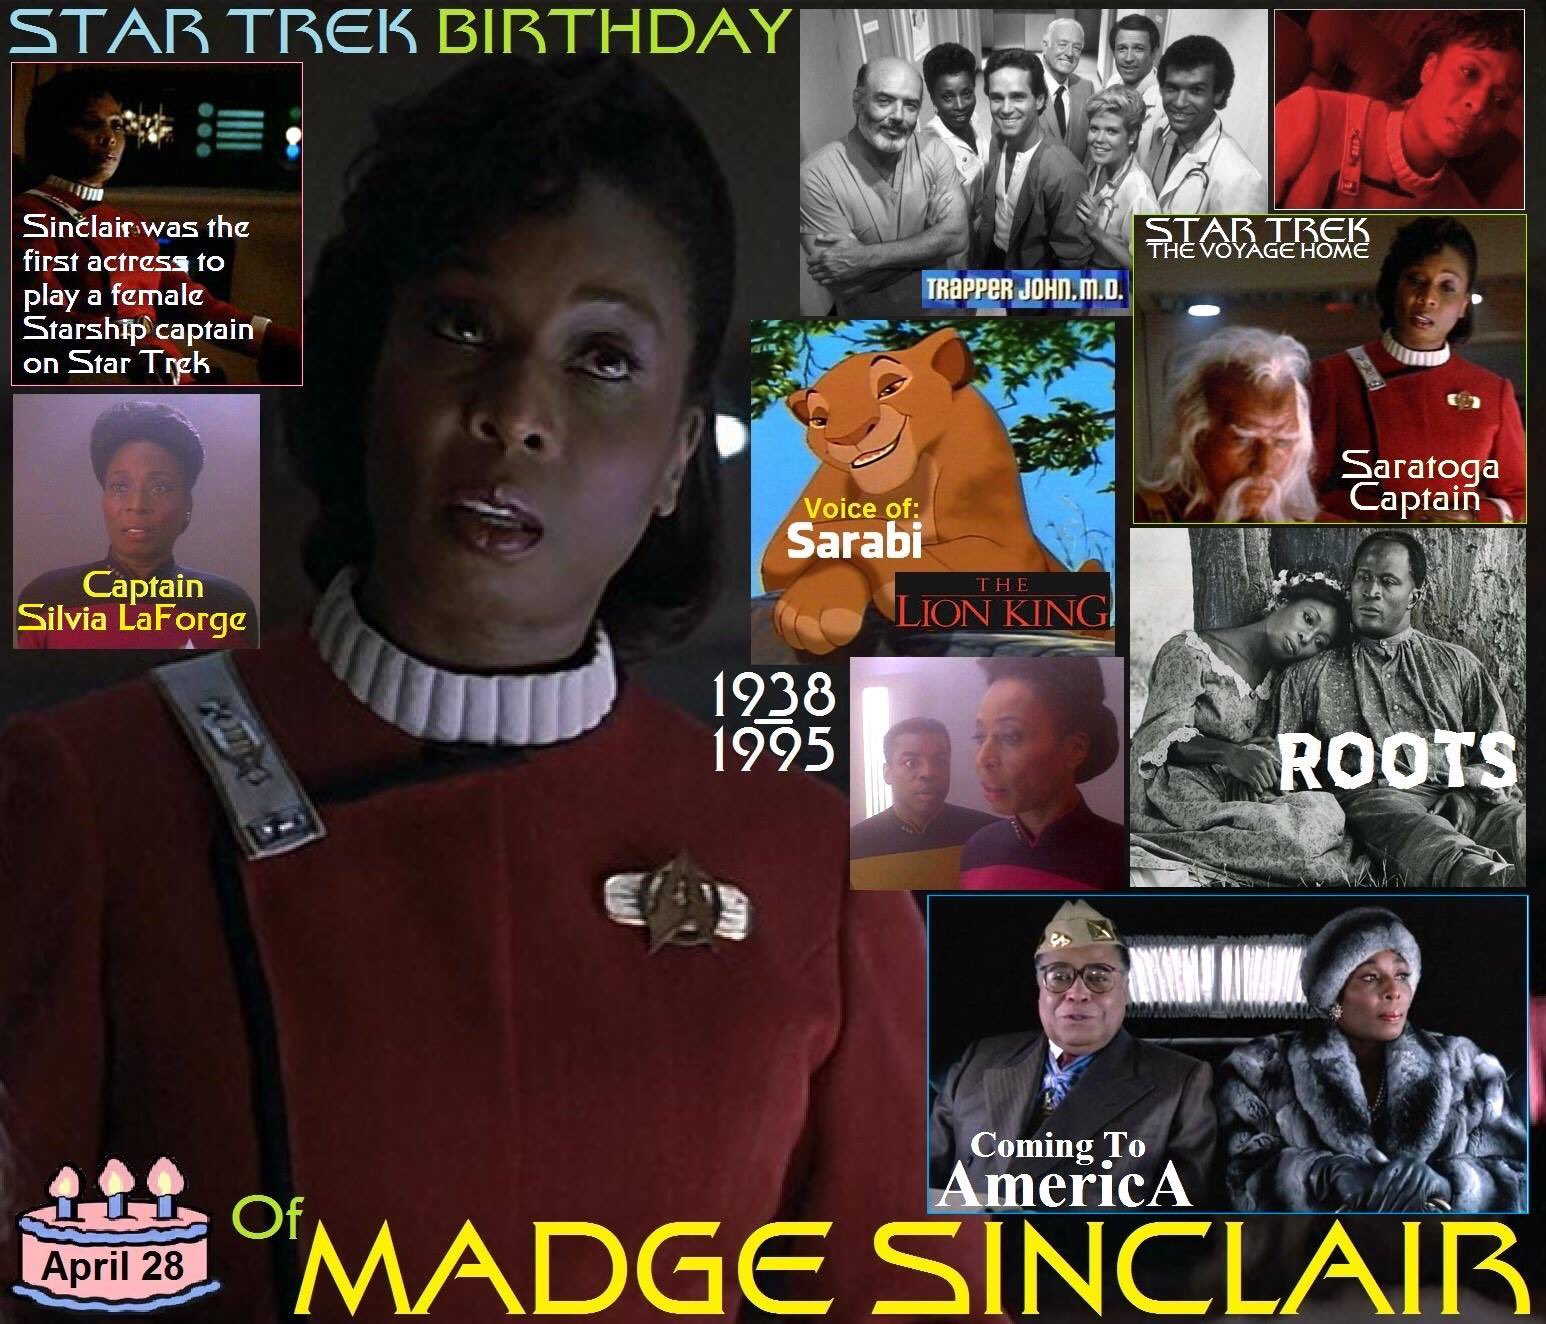  Happy birthday Madge Sinclair aka Captain Silvia LaForge. 